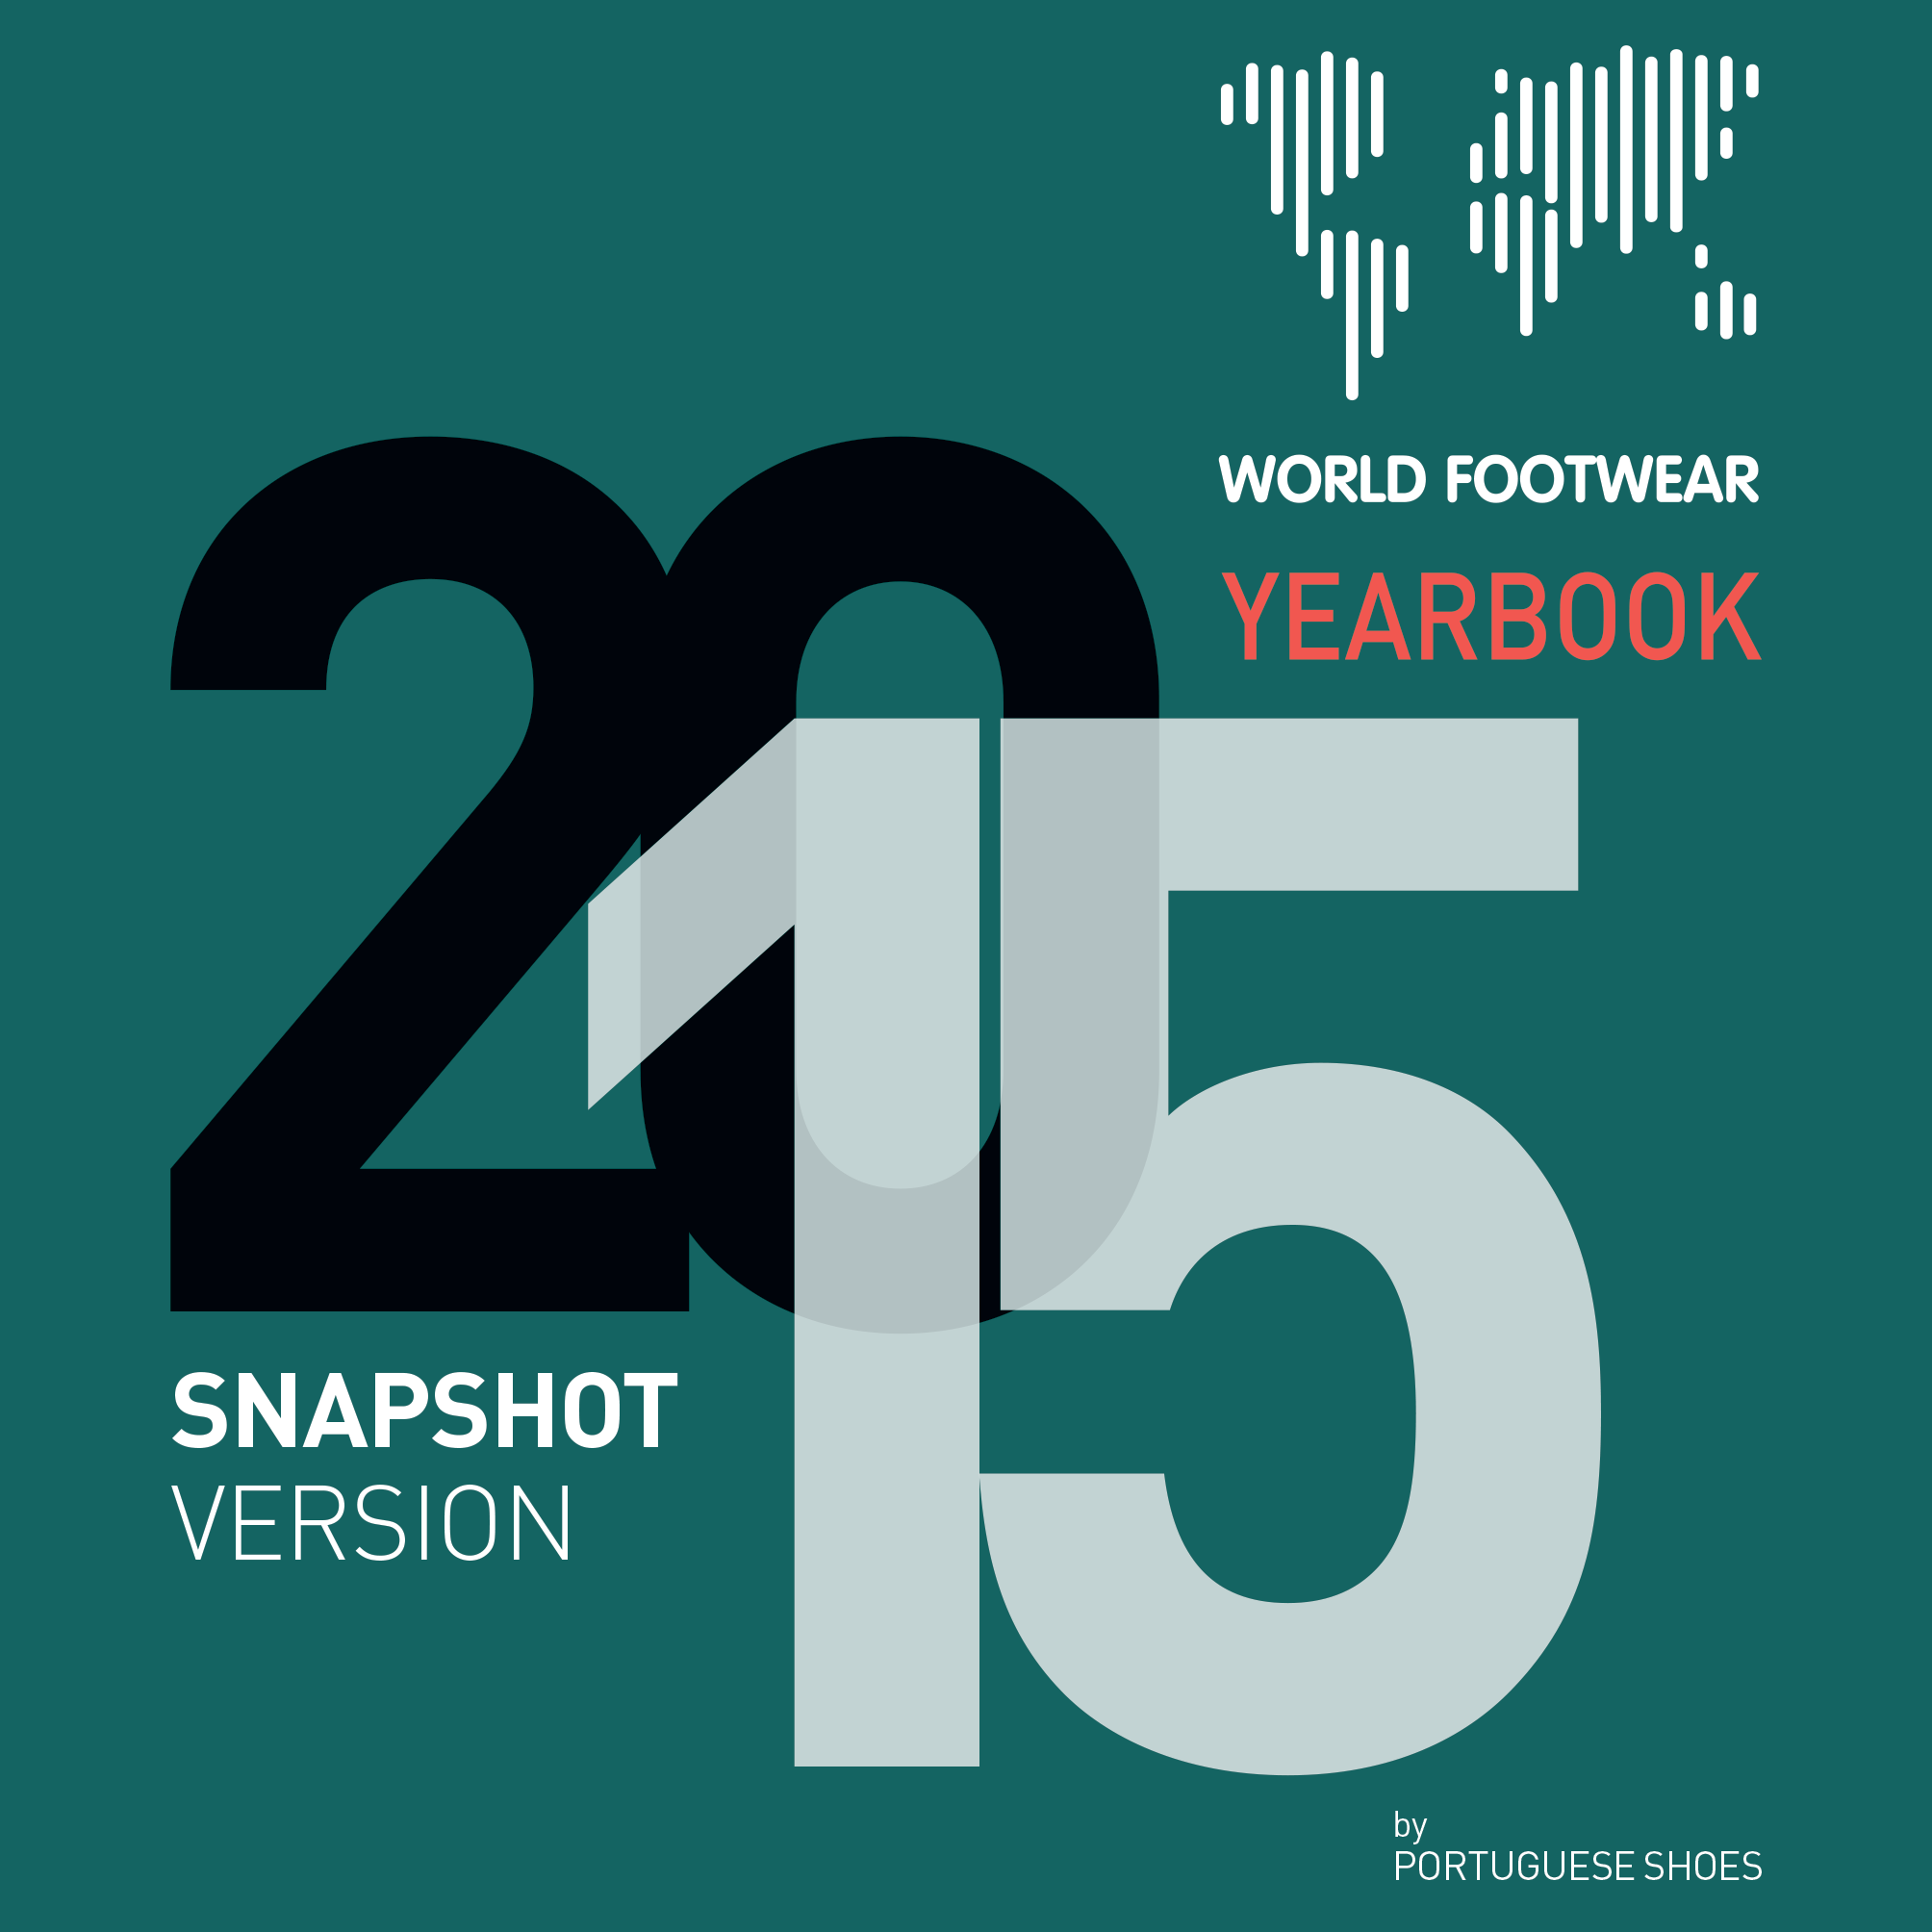 World Footwear Yearbook Snapshot 2015